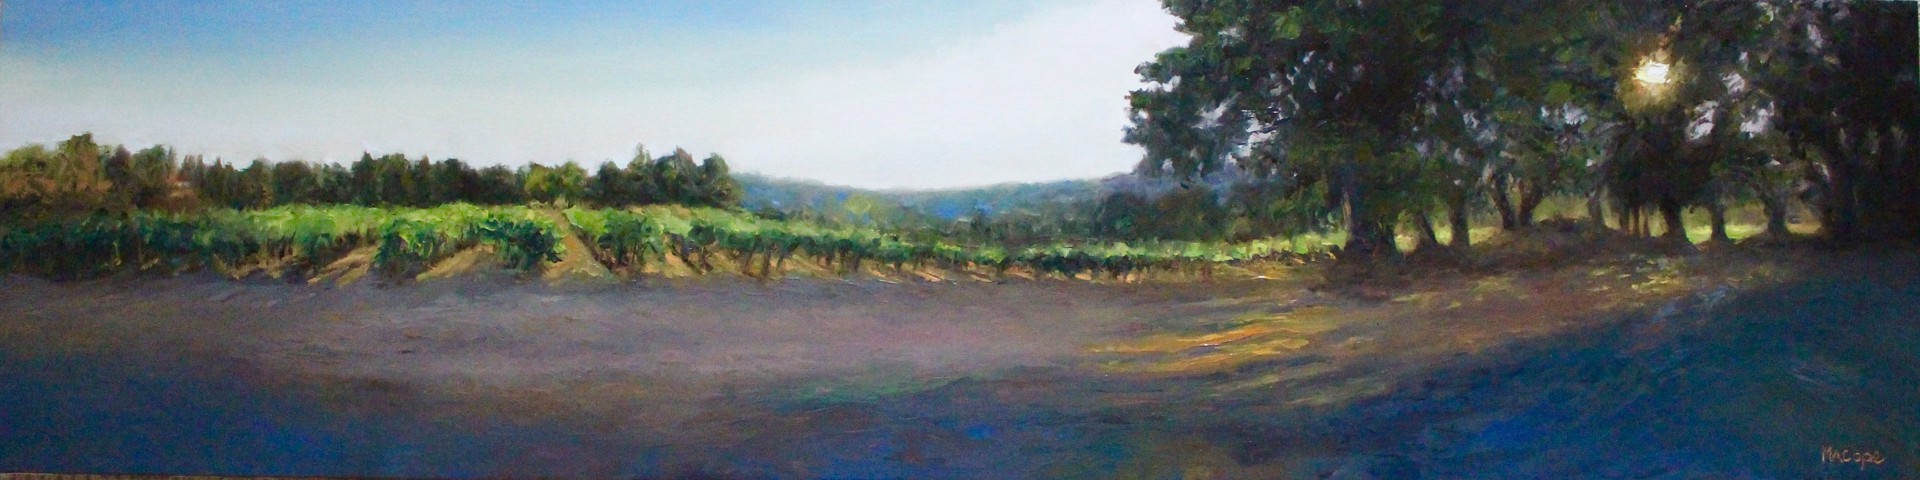 Bella Vista Vineyard by Mary Ann Cope